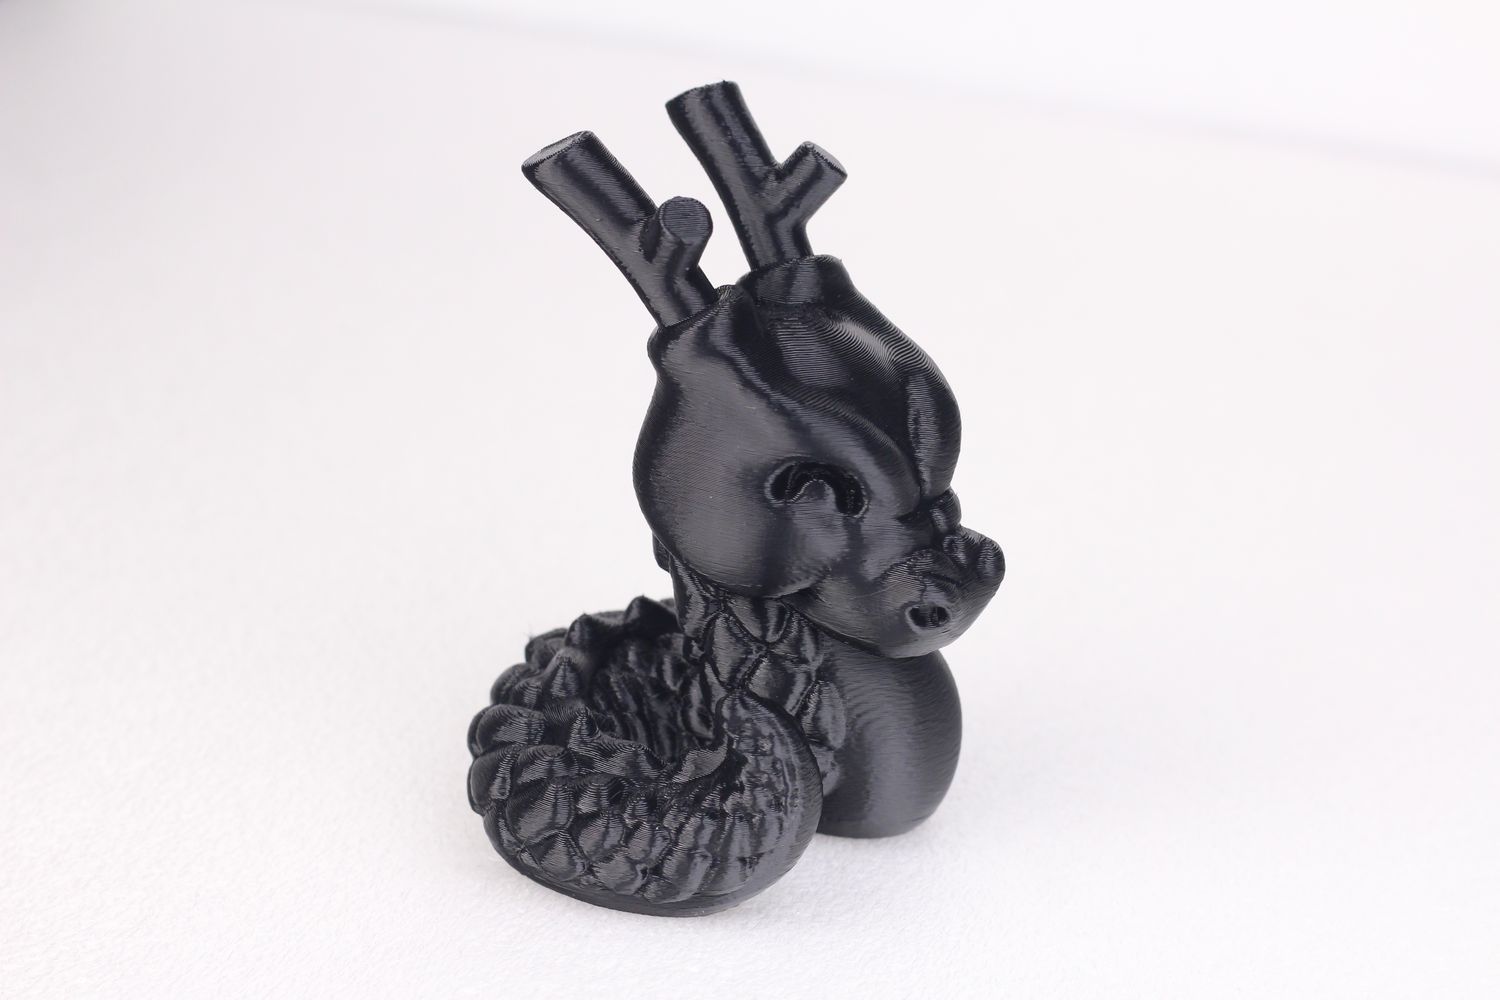 Cali Dragon printed in Polycarbonate Filament1 | Bambu Lab X1 Review: Just as Good